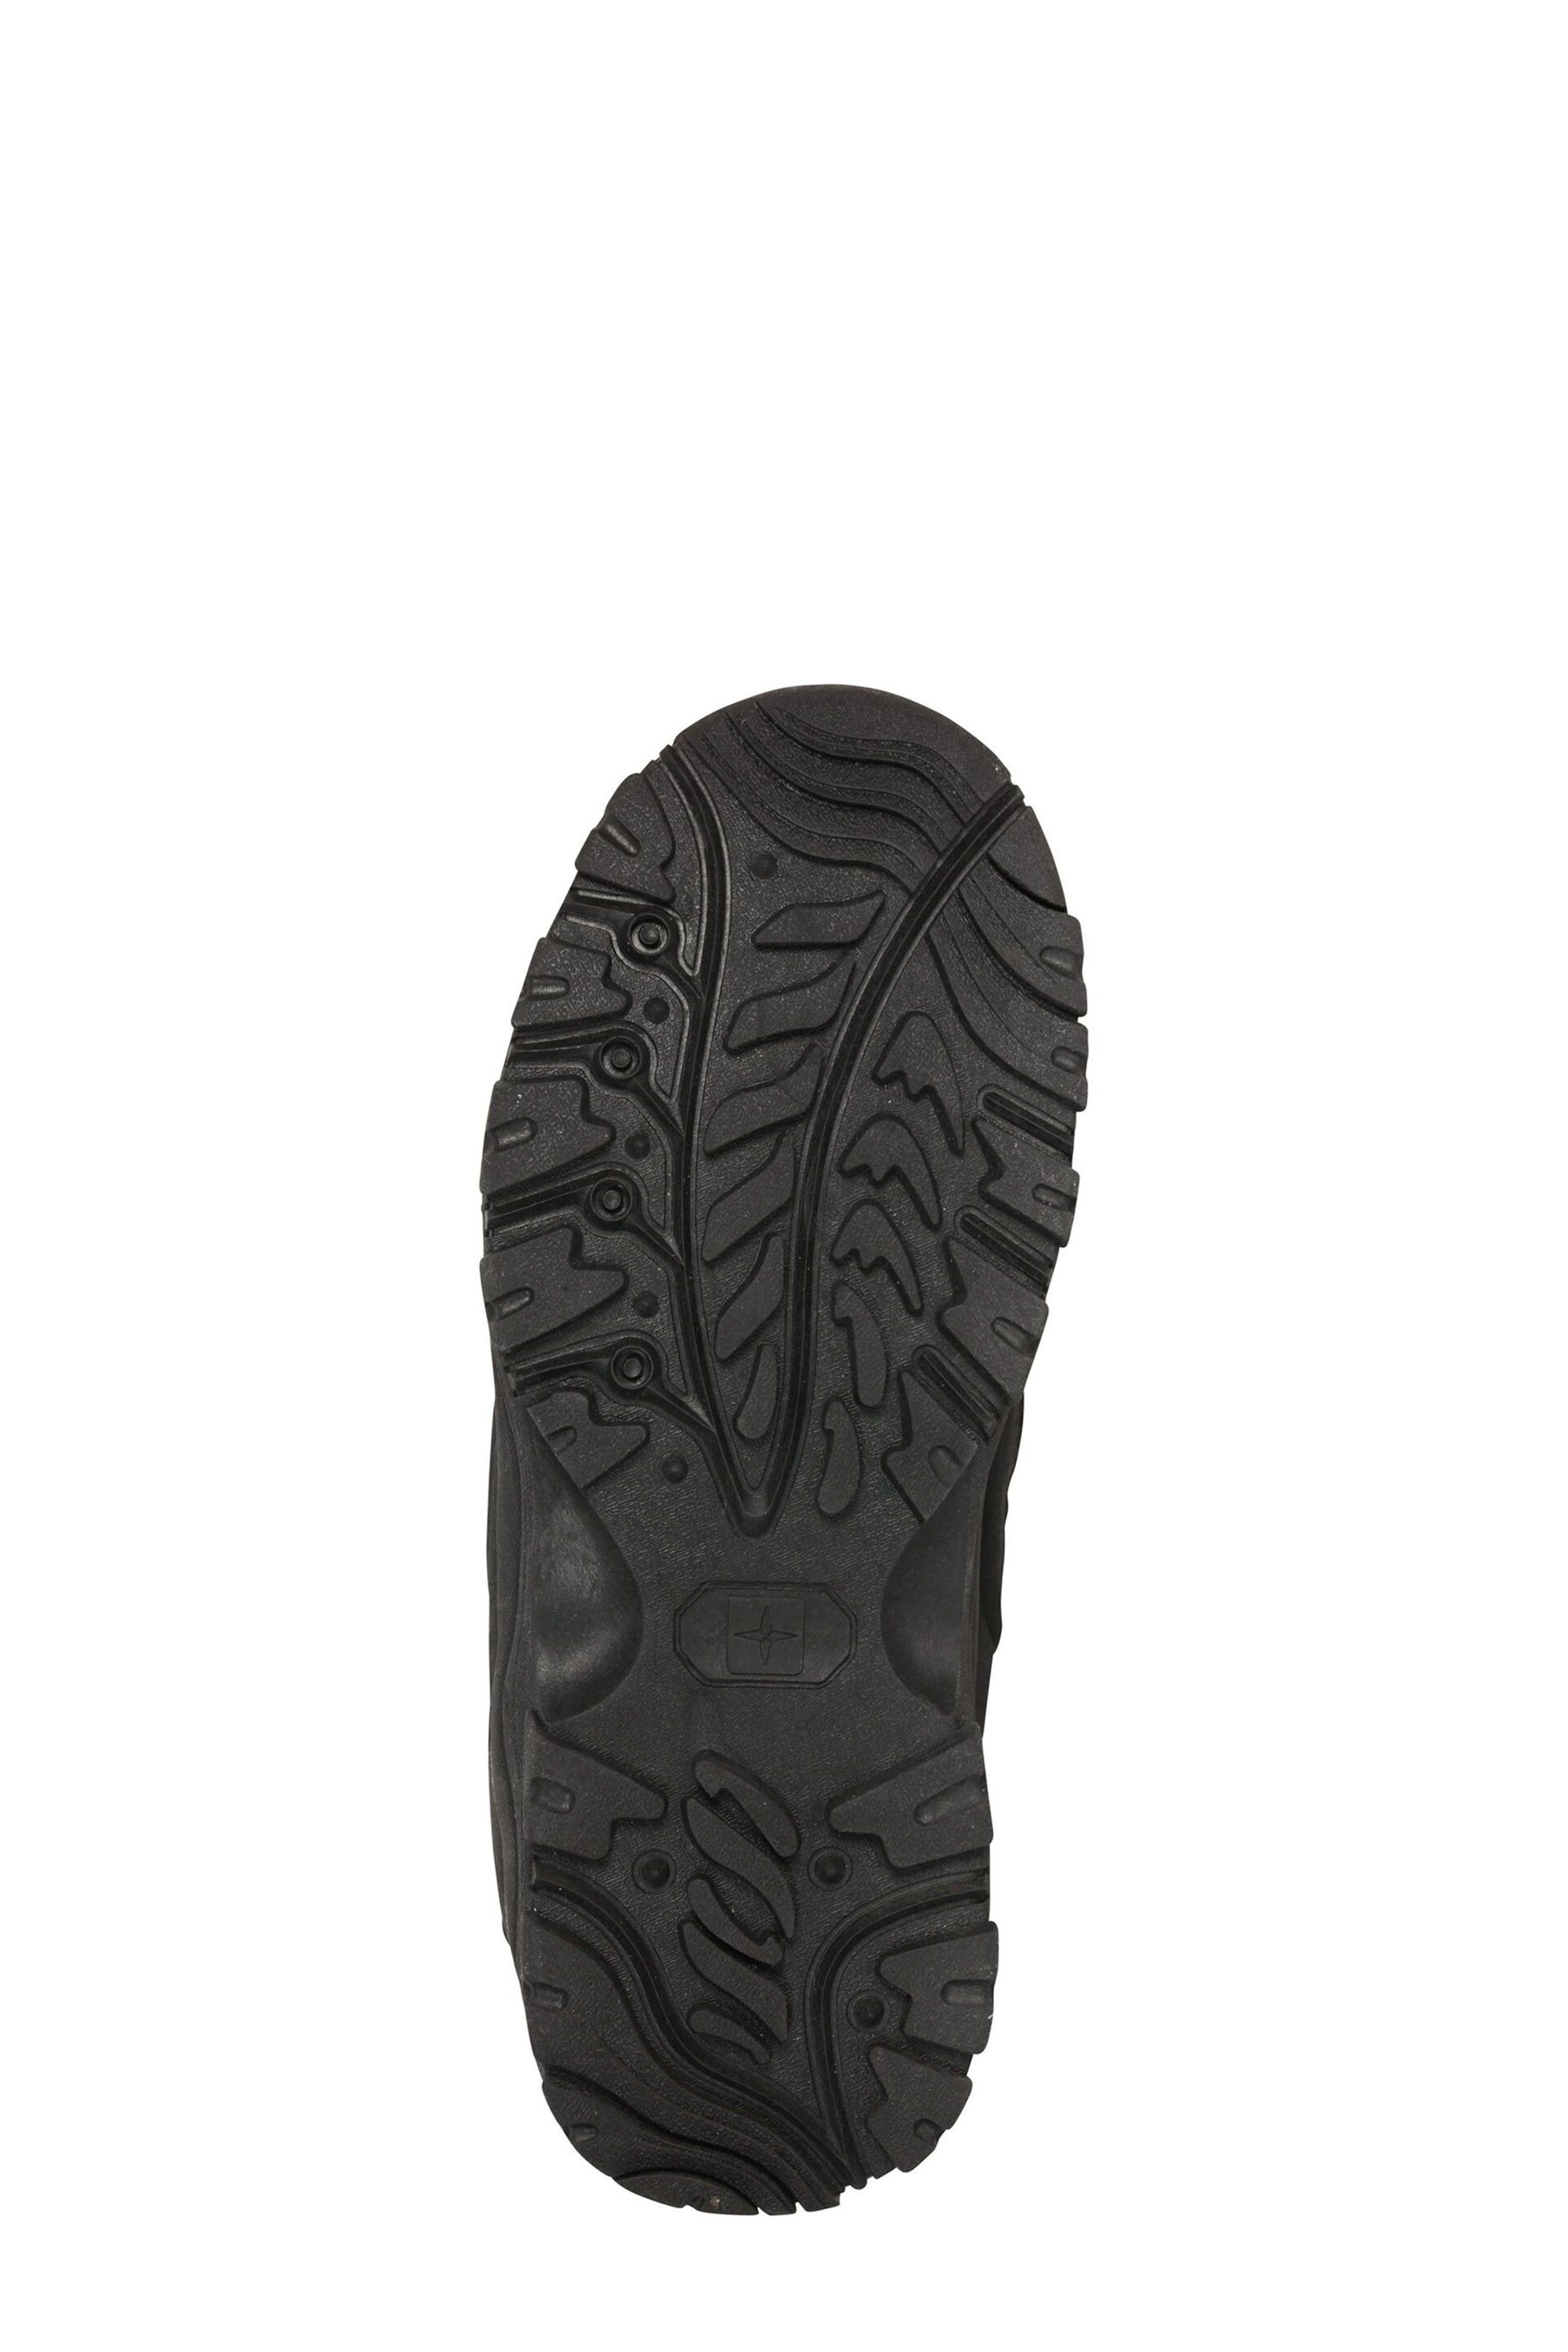 Mountain Warehouse Black Adventurer Waterproof Boots - Image 4 of 5